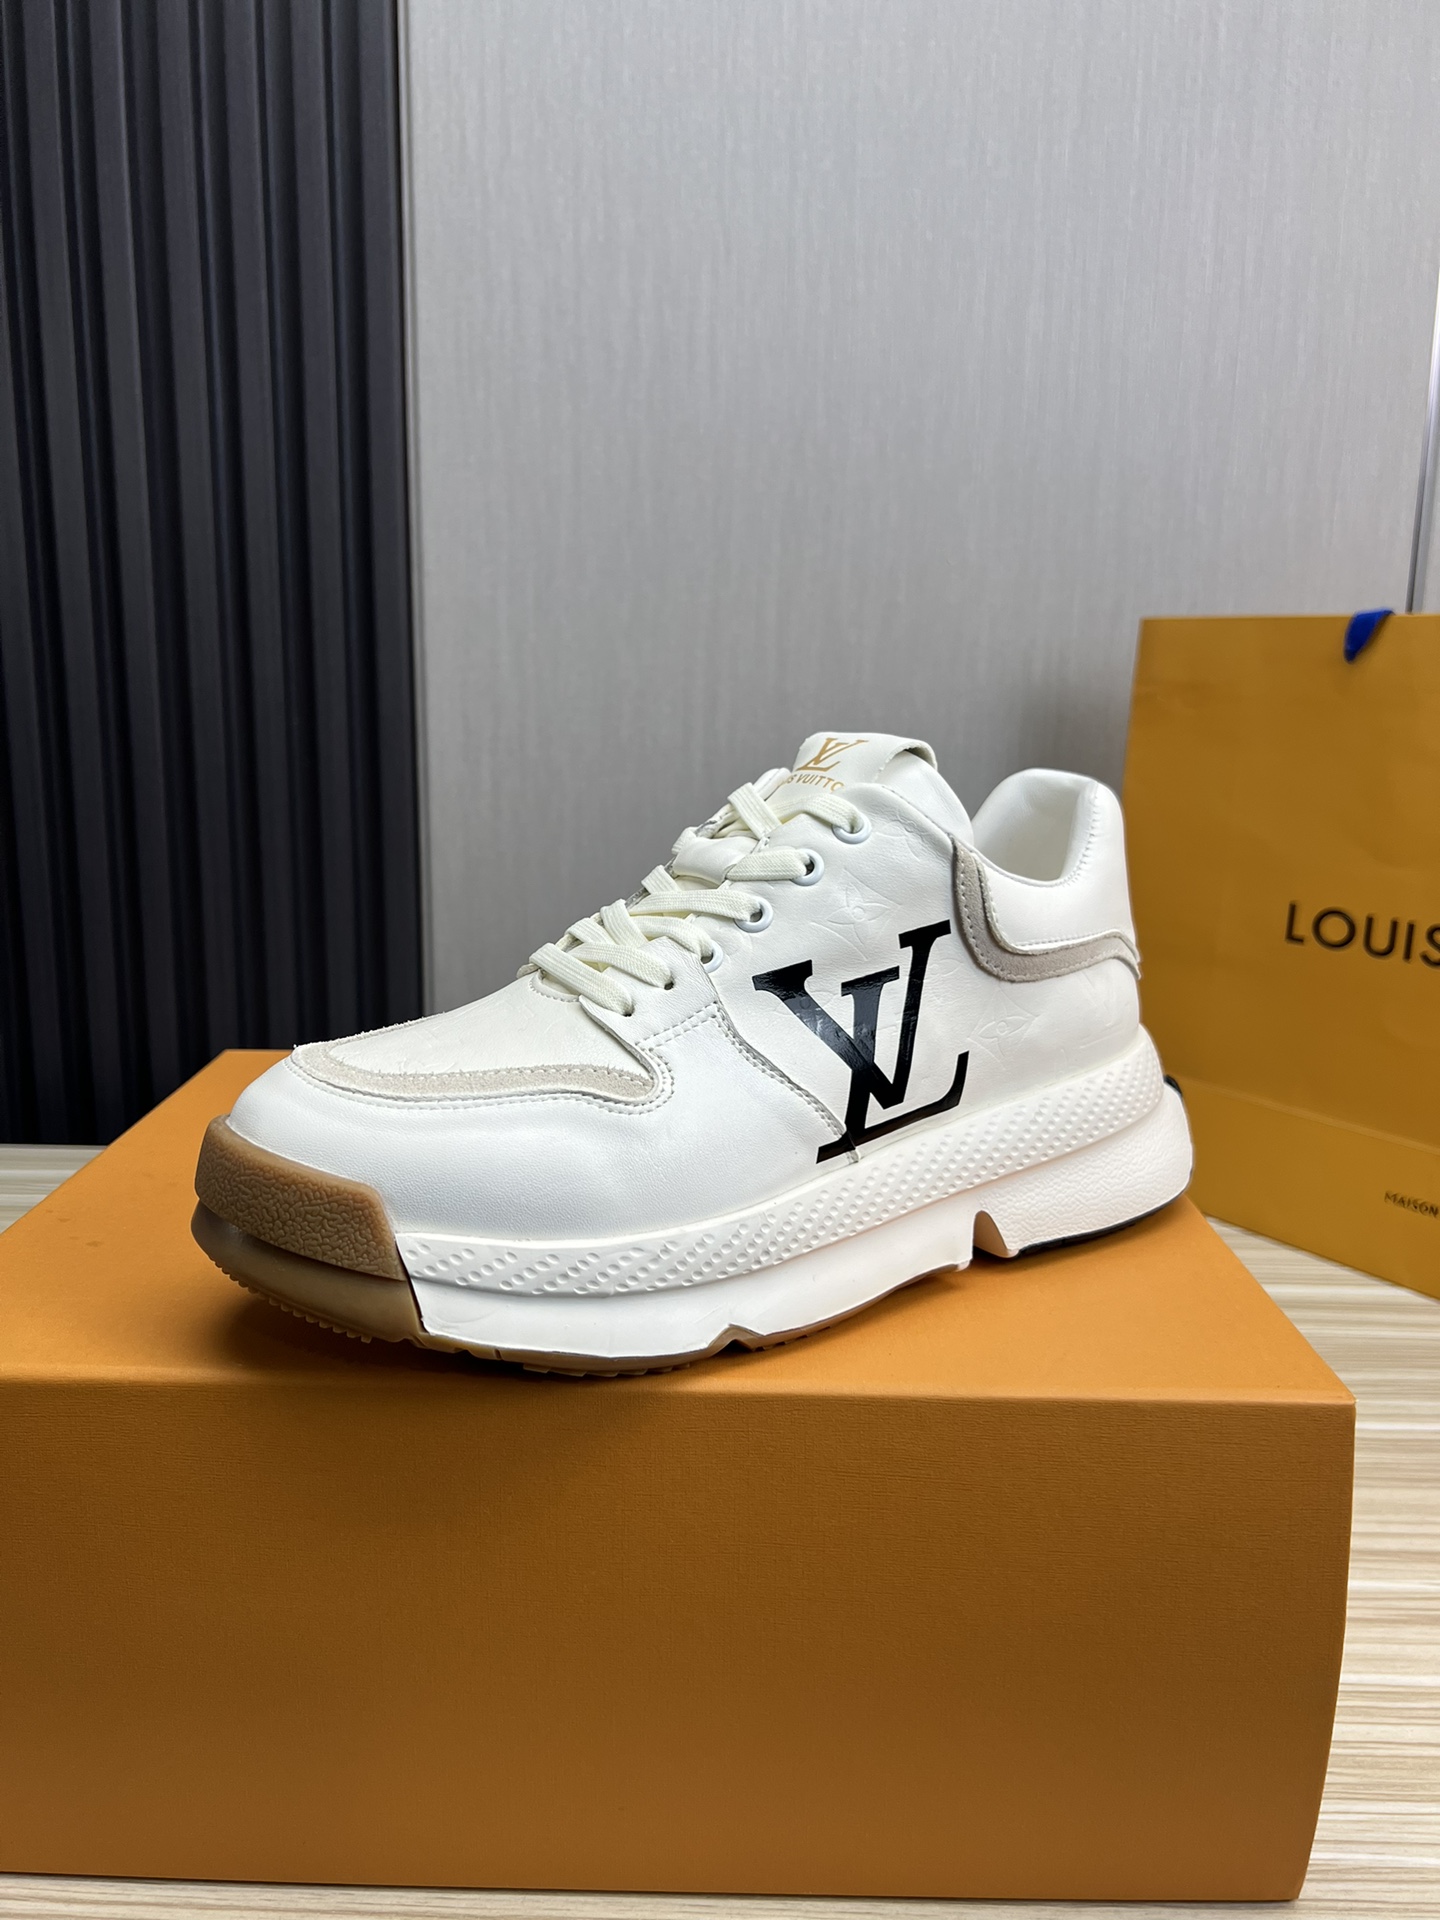 Louis Vuitton Skateboard Shoes Men Cowhide Genuine Leather Rubber Fashion Casual